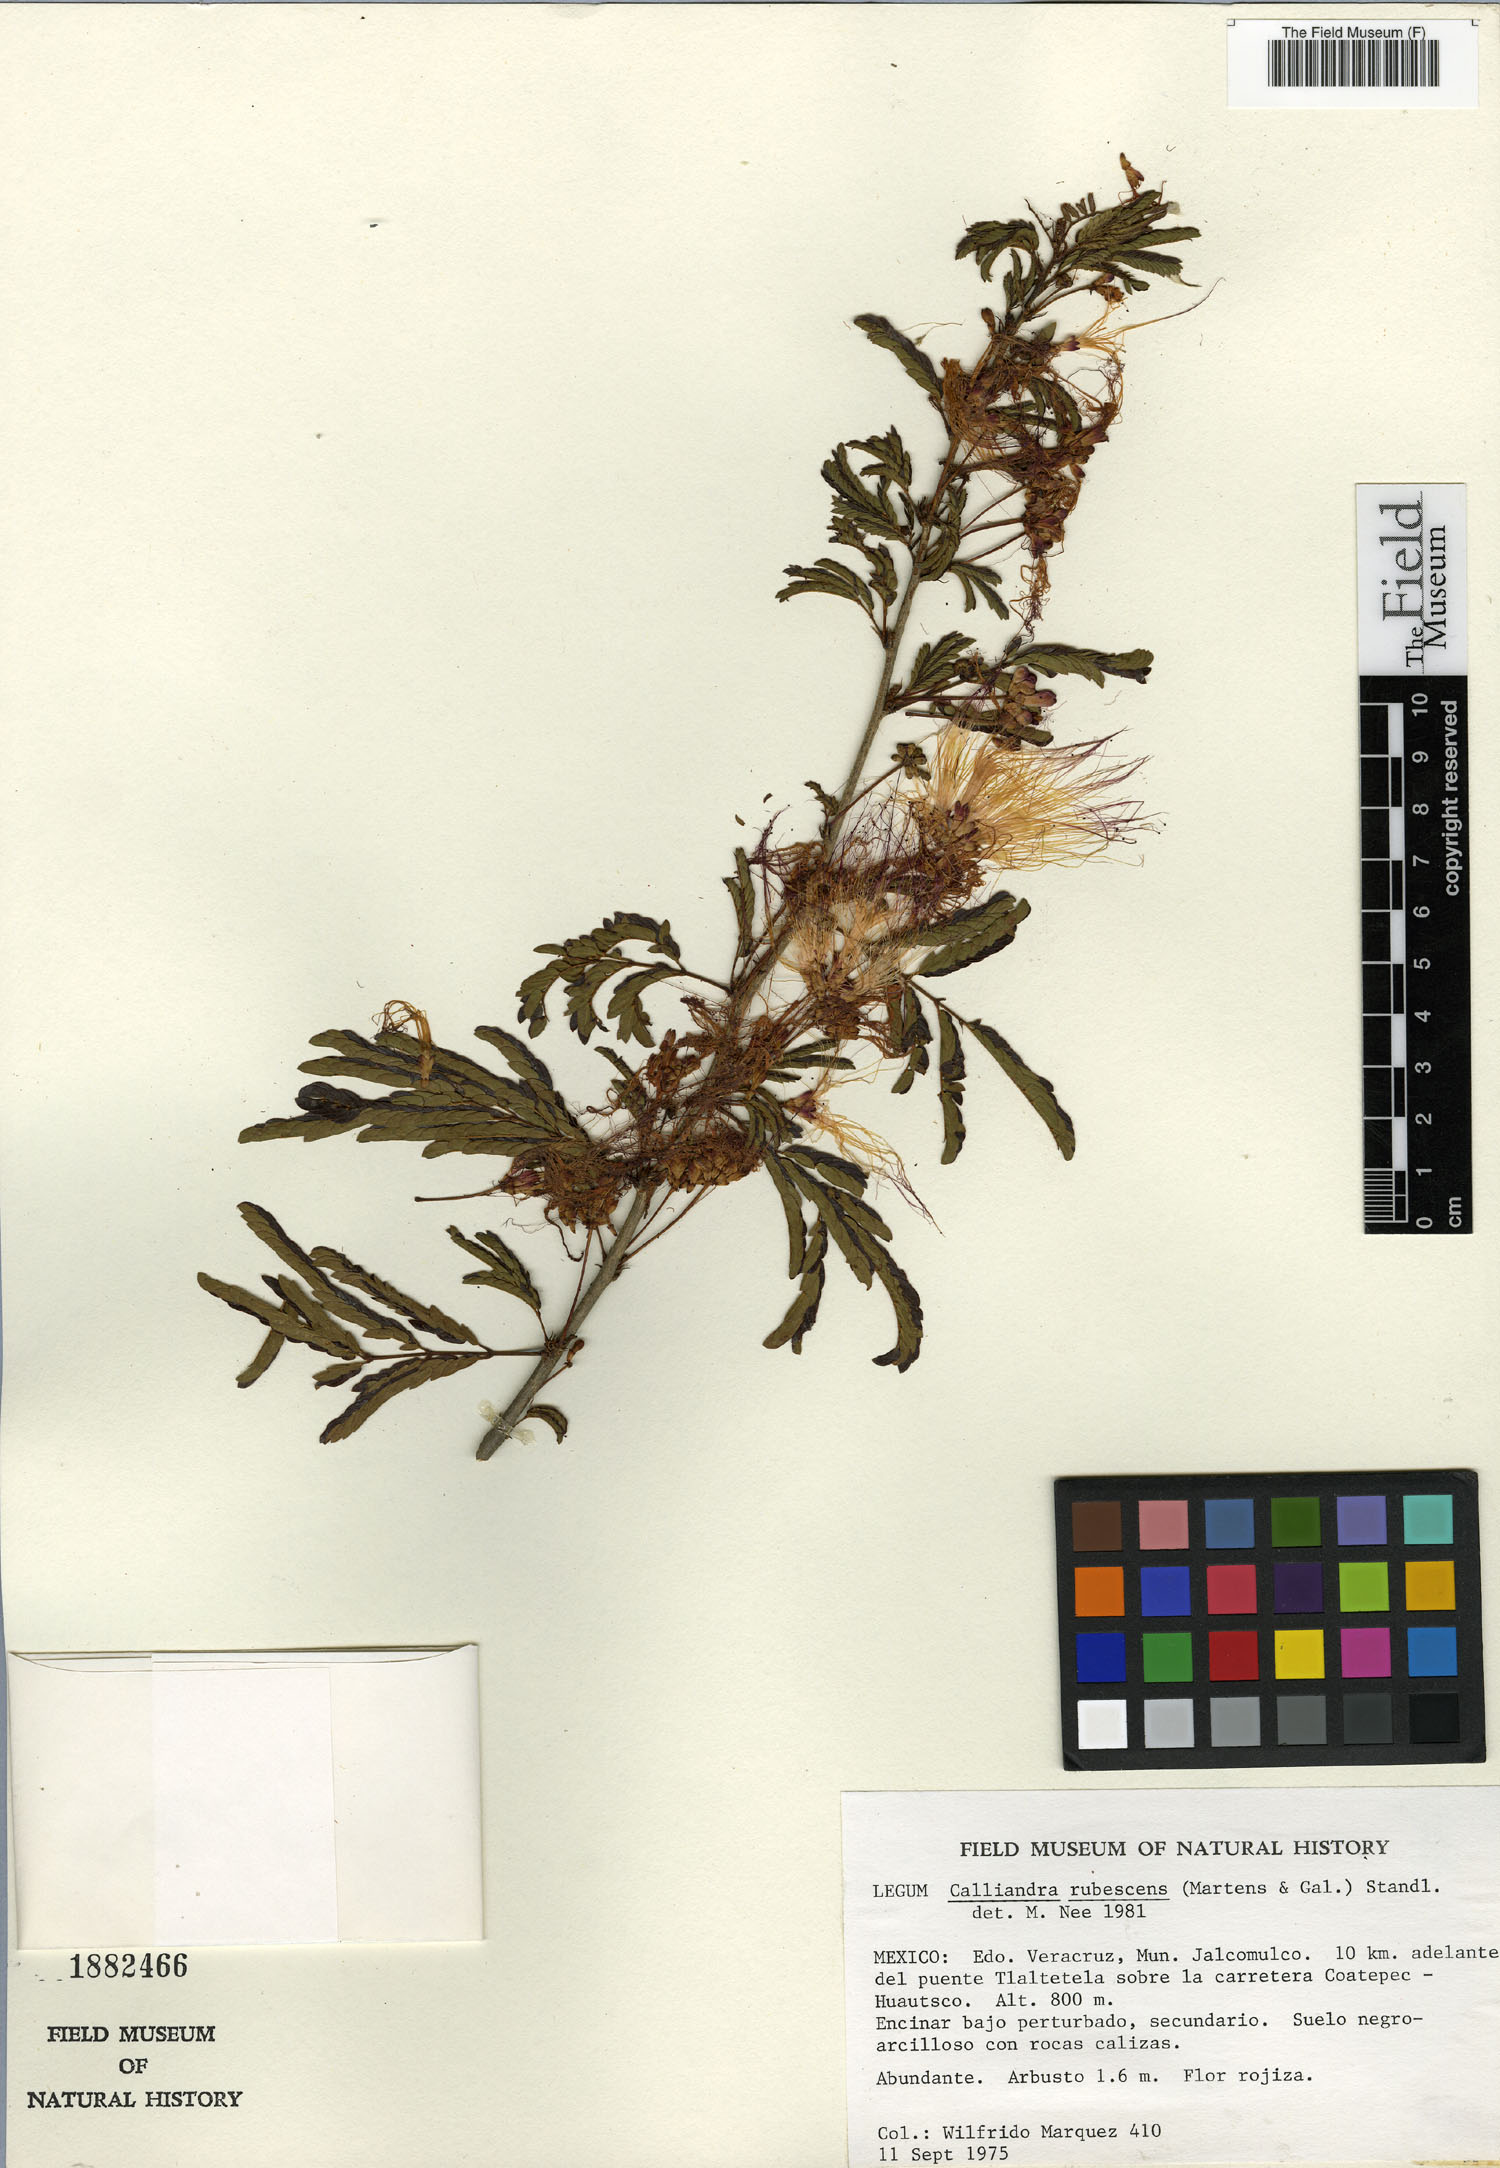 Calliandra rubescens image